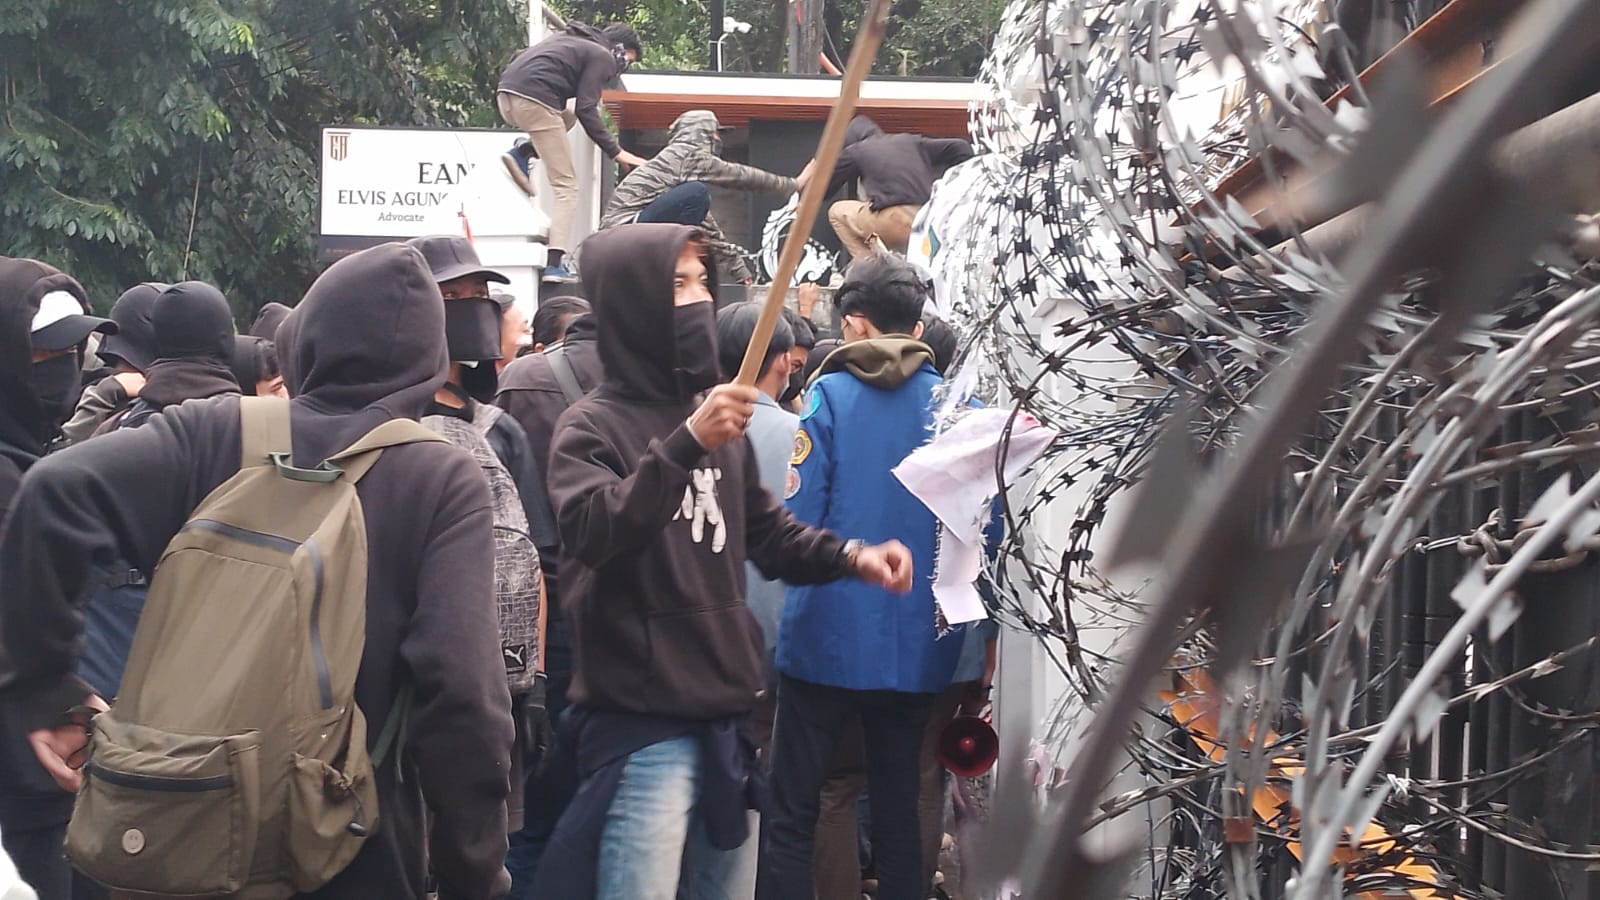 Demo Mahasiswa di Bandung Berakhir Ricuh, Polisi Kejar hingga Seret Massa Aksi yang Kabur